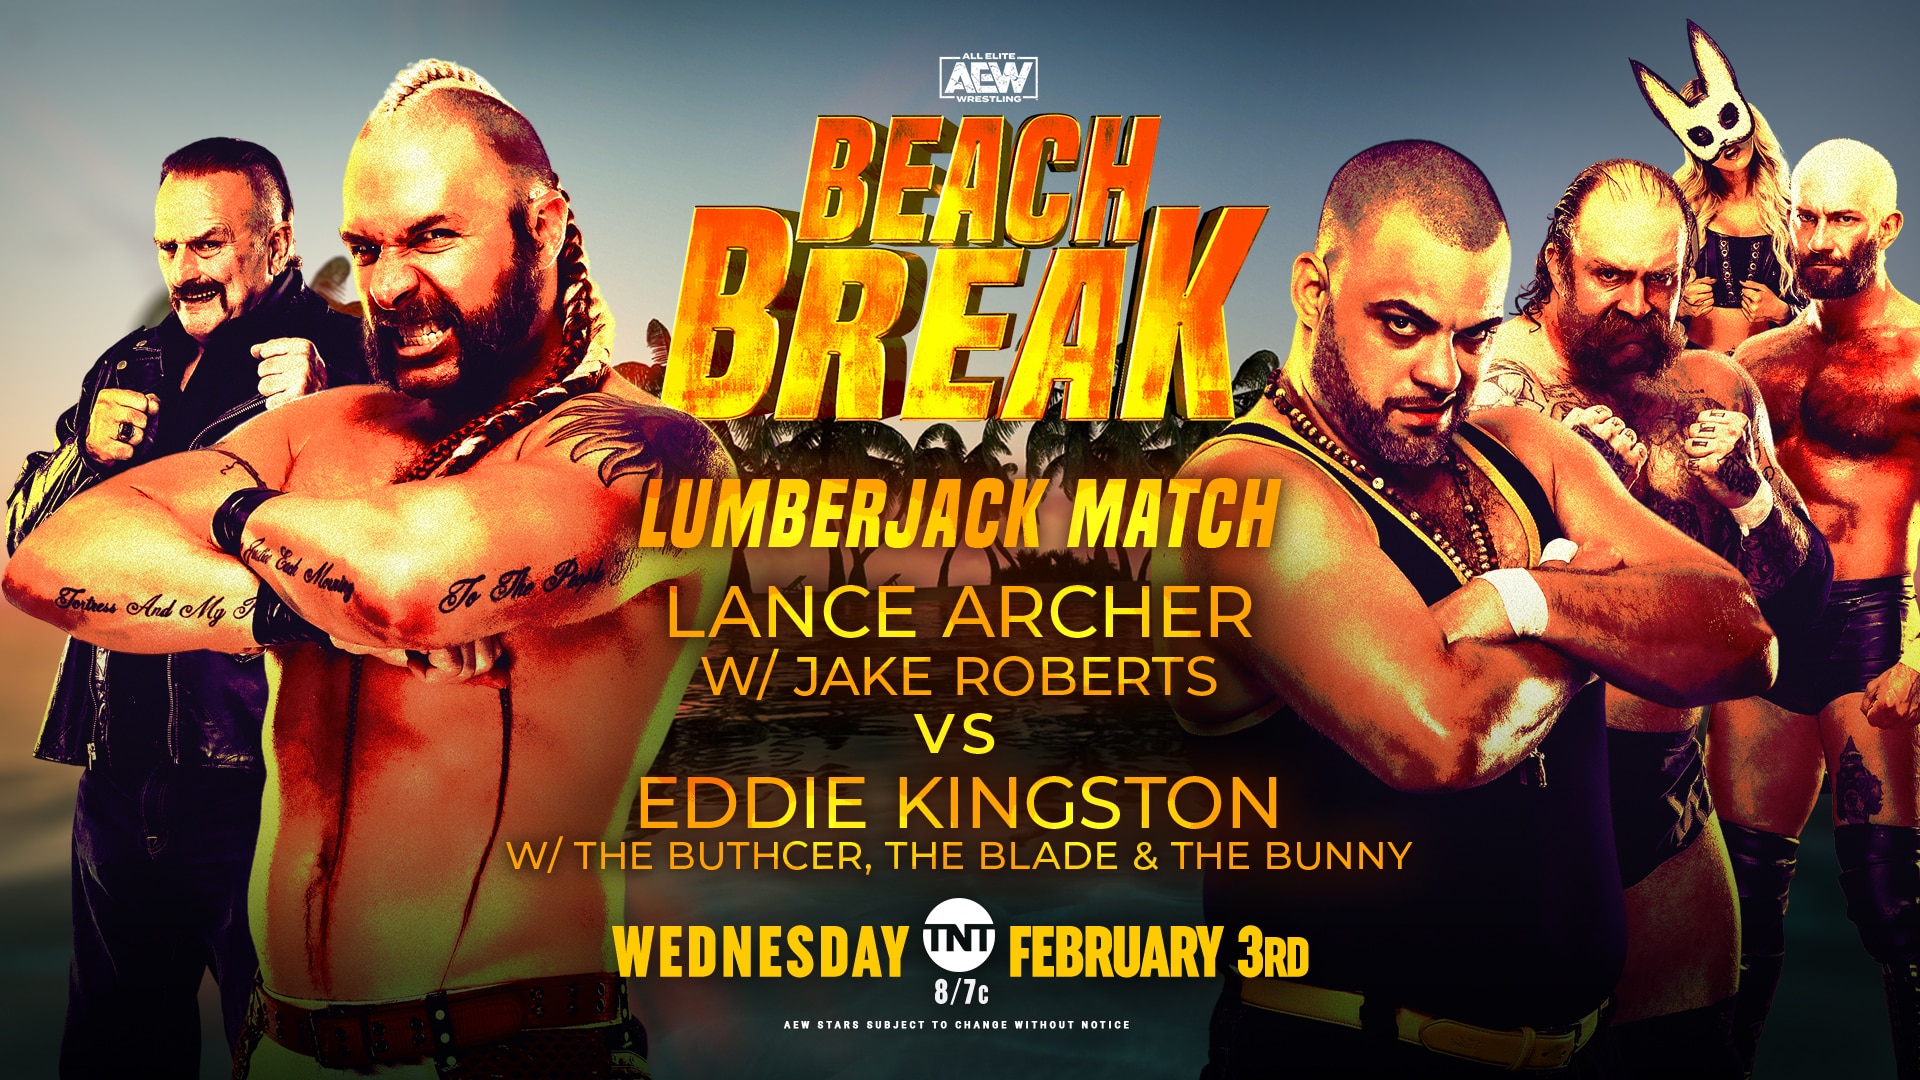 Lance Archer vs Eddie Kingston in lumberjack match